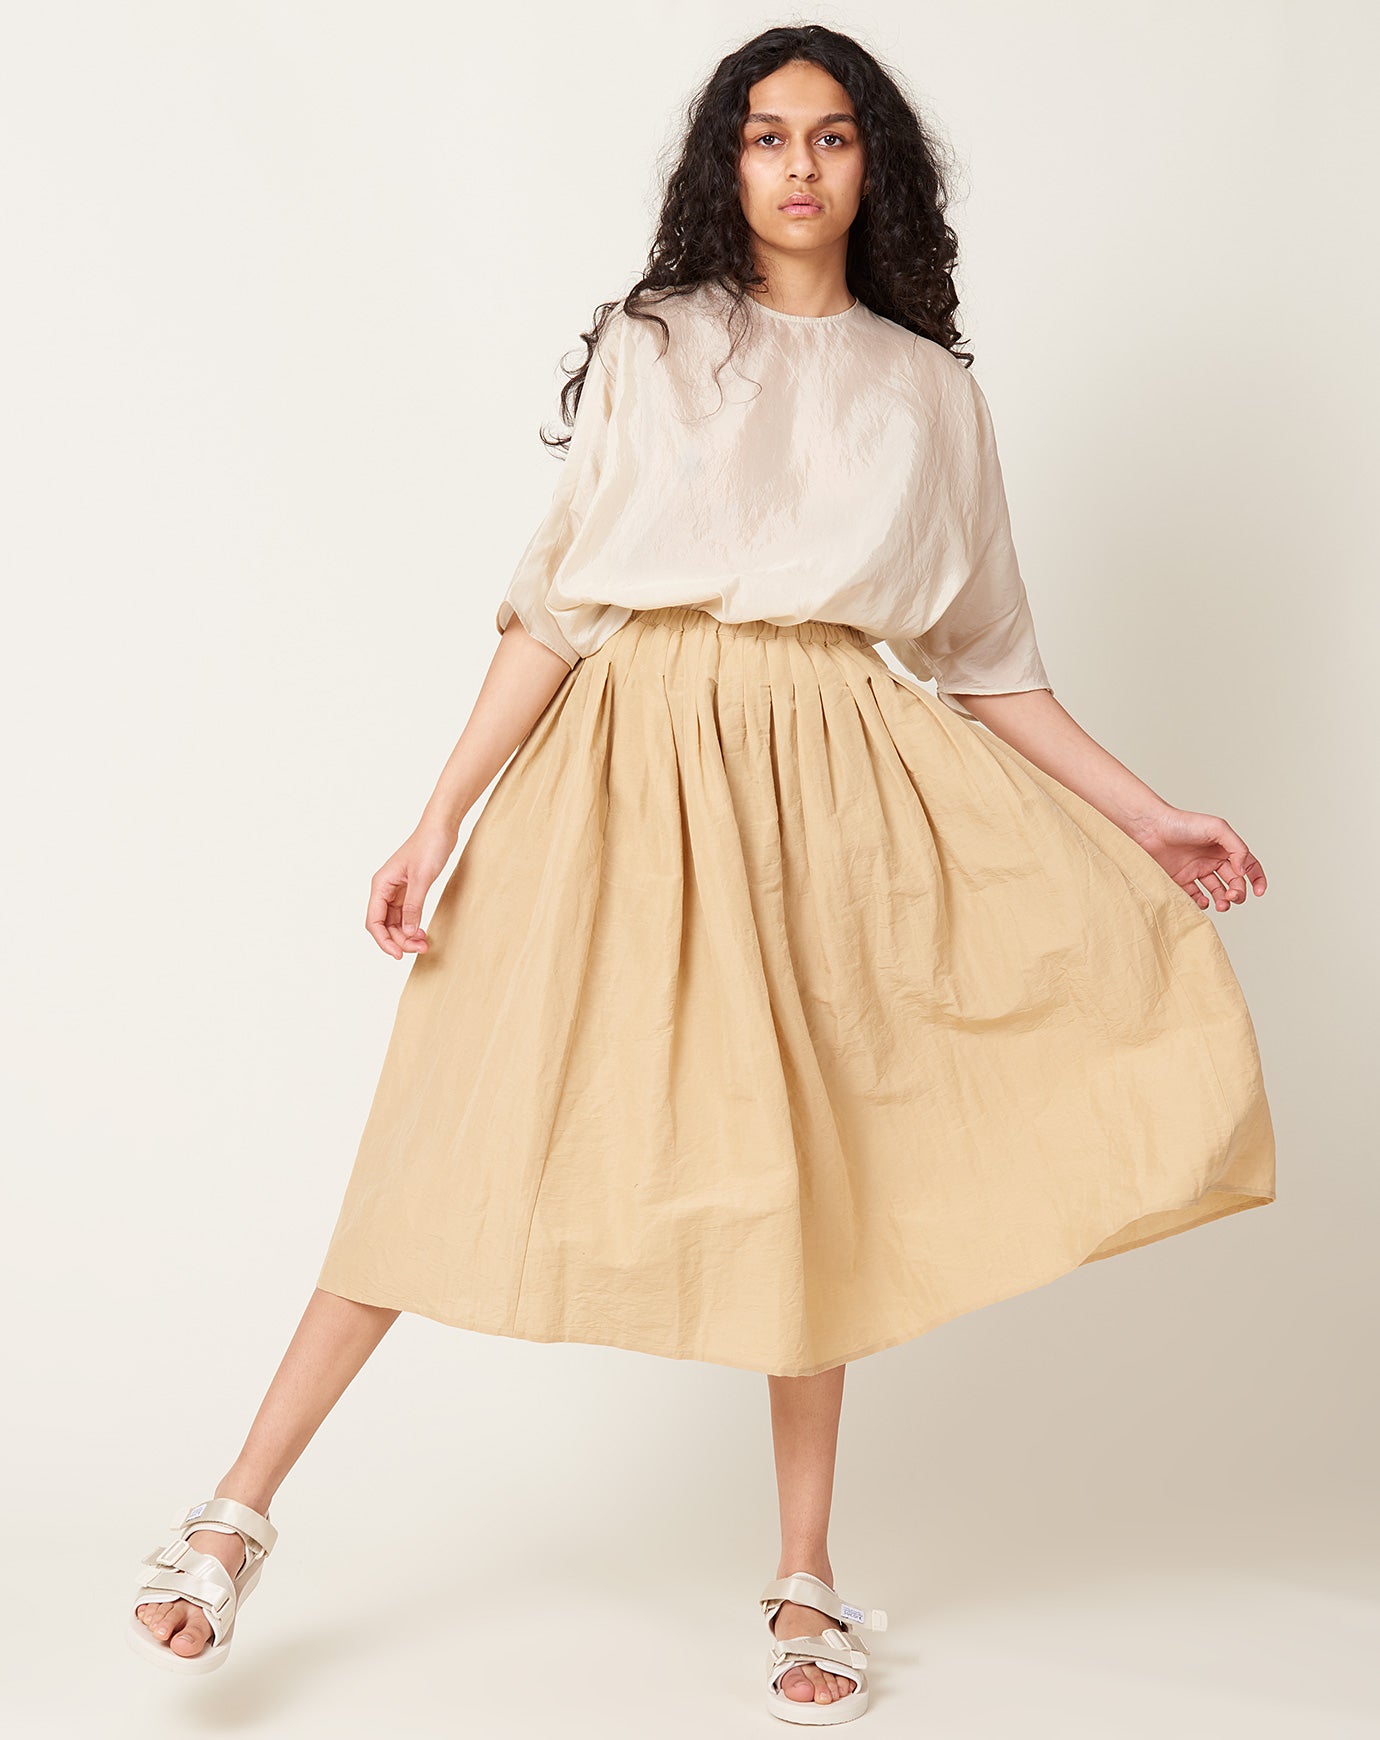 apuntob Pleat Skirt in Honey Linen Cotton